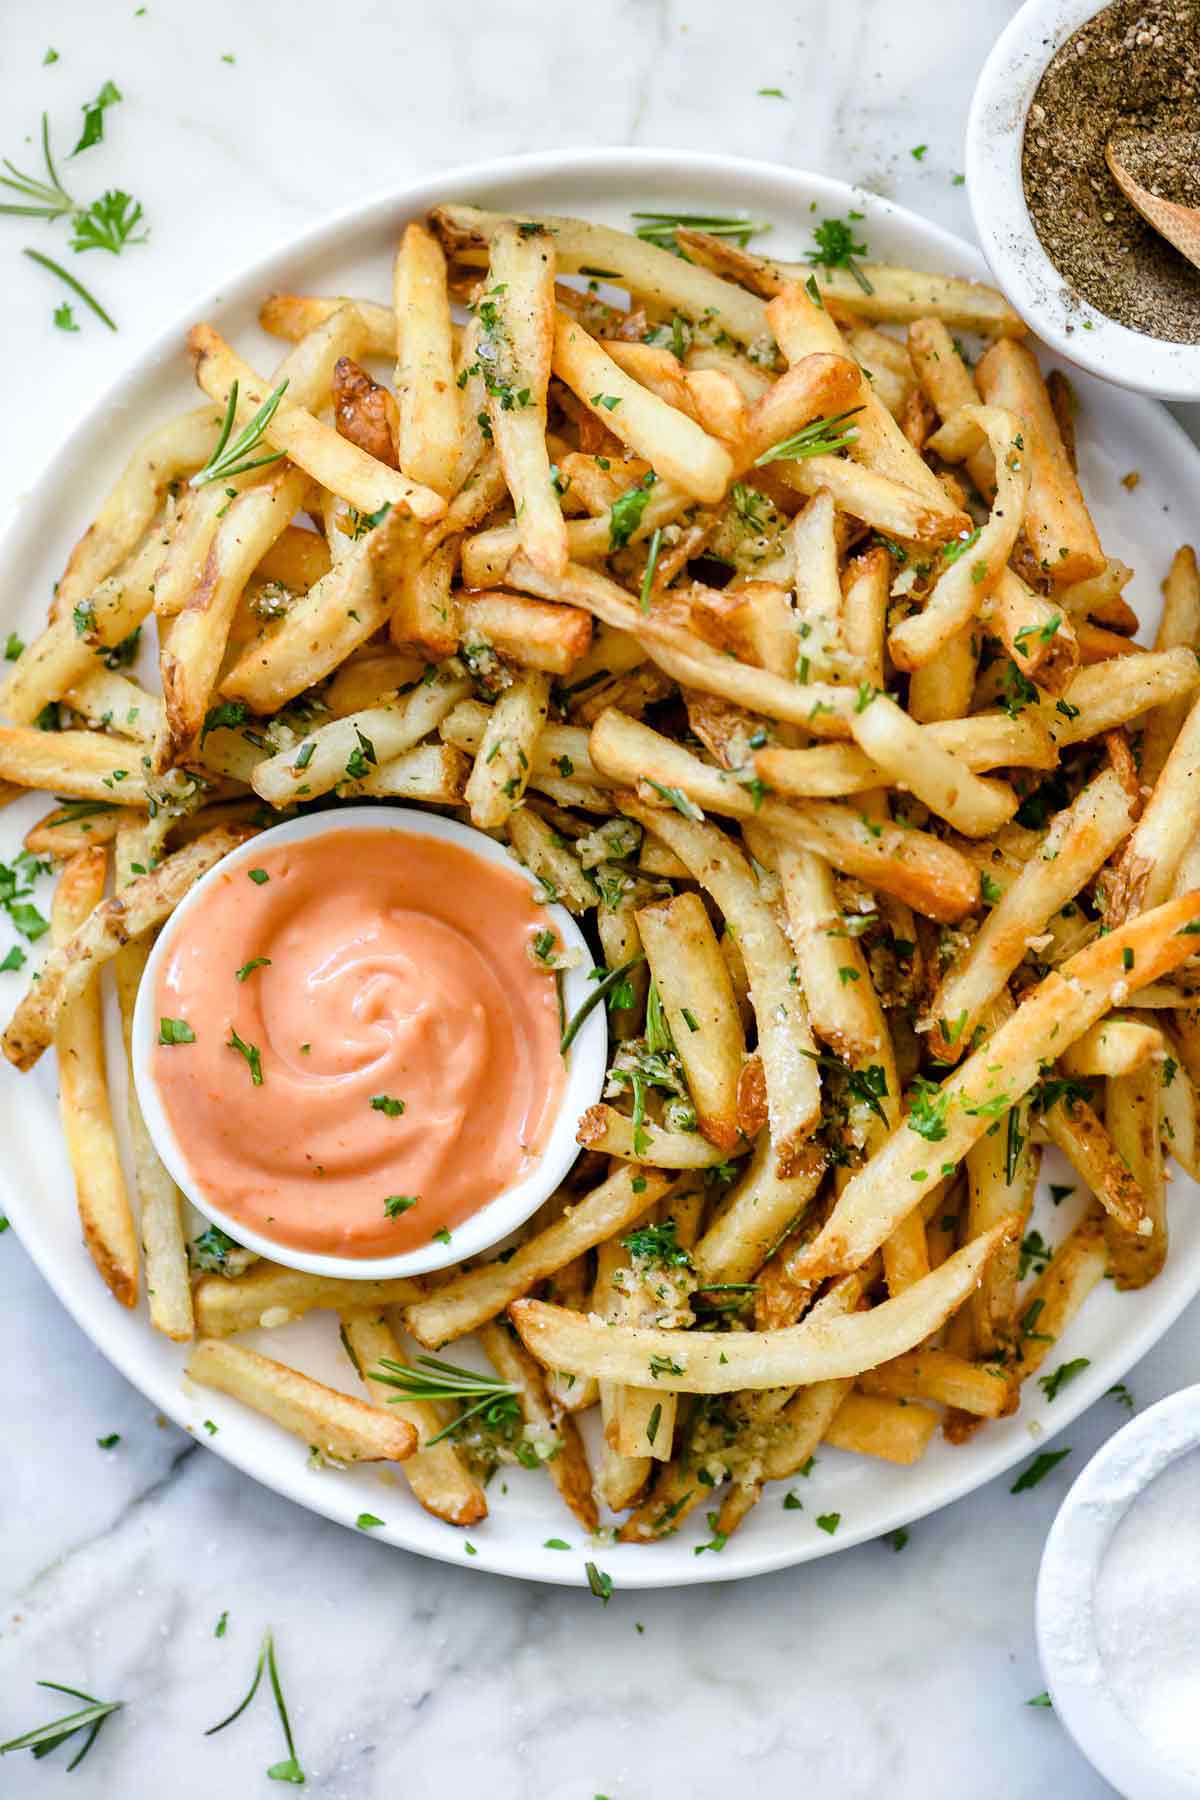 Frites à l'ail et au romarin | foodiecrush.com #fries #frenchfries #garlic #recipes